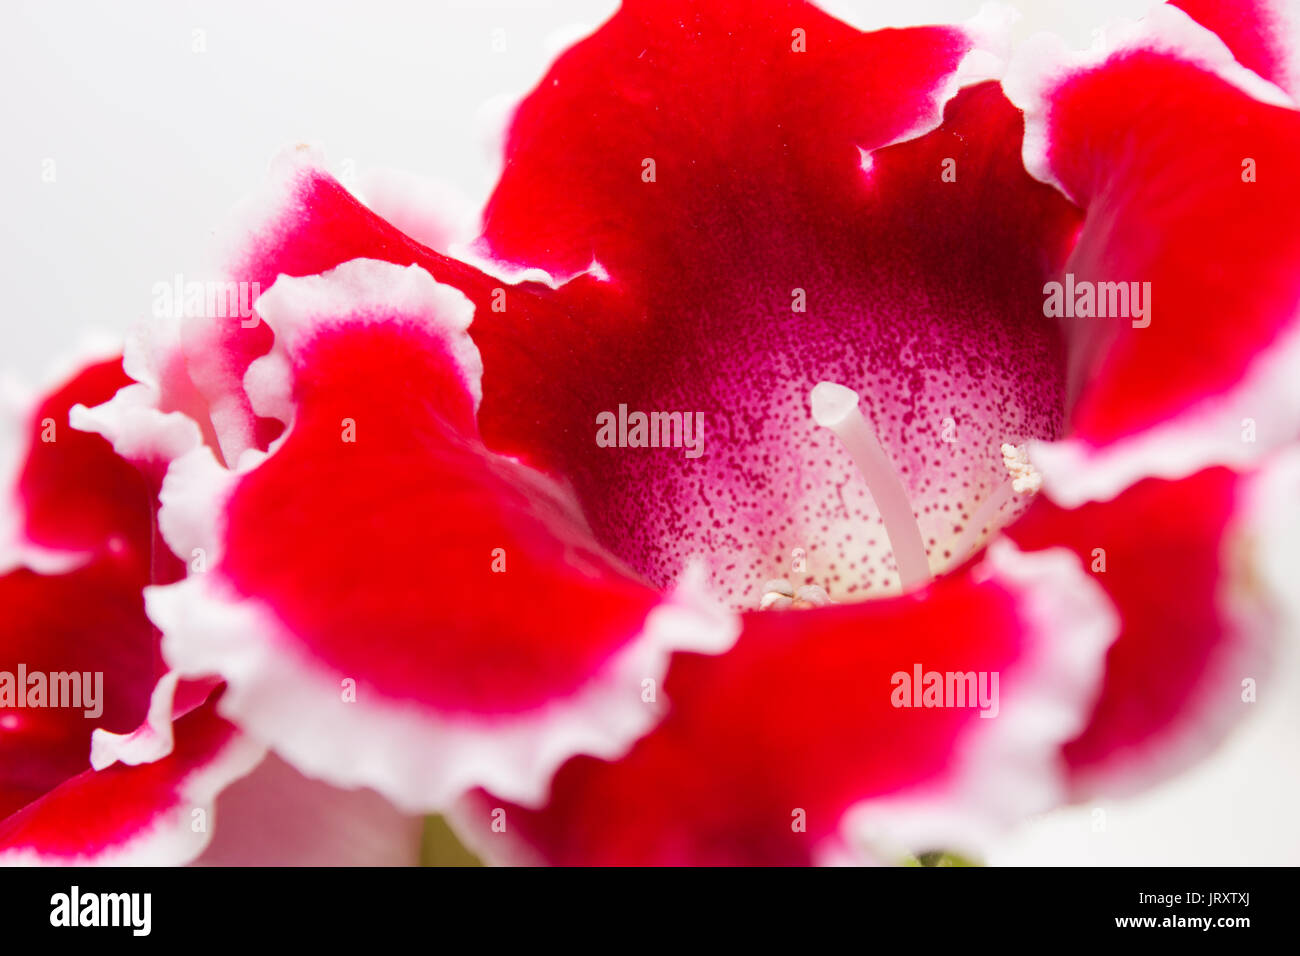 Blooming gloxinia (sinningia speciosa) red with white edging on white background Stock Photo